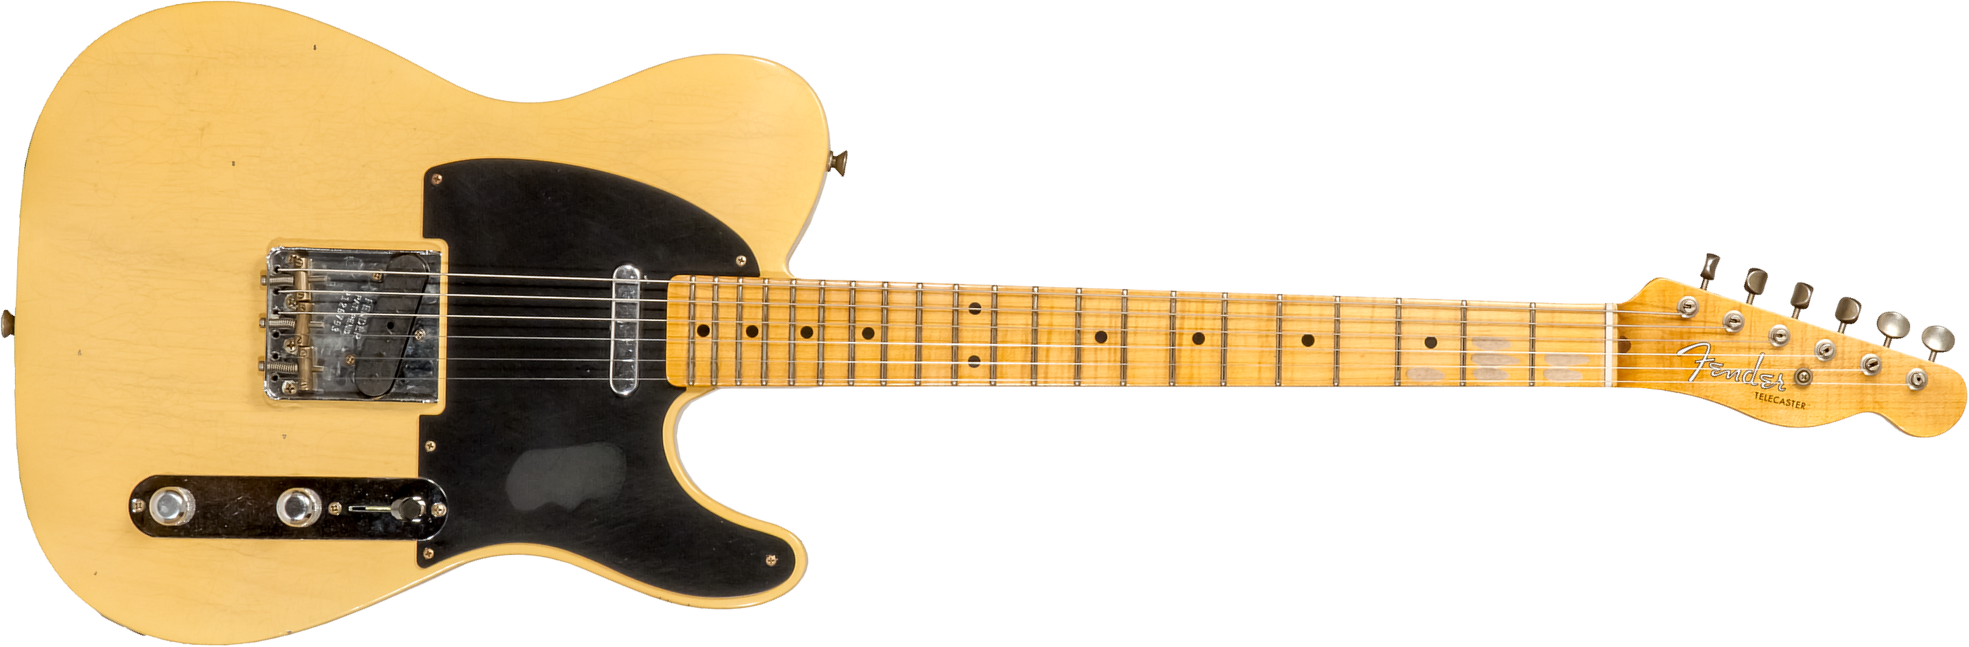 Fender Custom Shop Tele 1953 2s Ht Mn #r126793 - Journeyman Relic Aged Nocaster Blonde - Televorm elektrische gitaar - Main picture